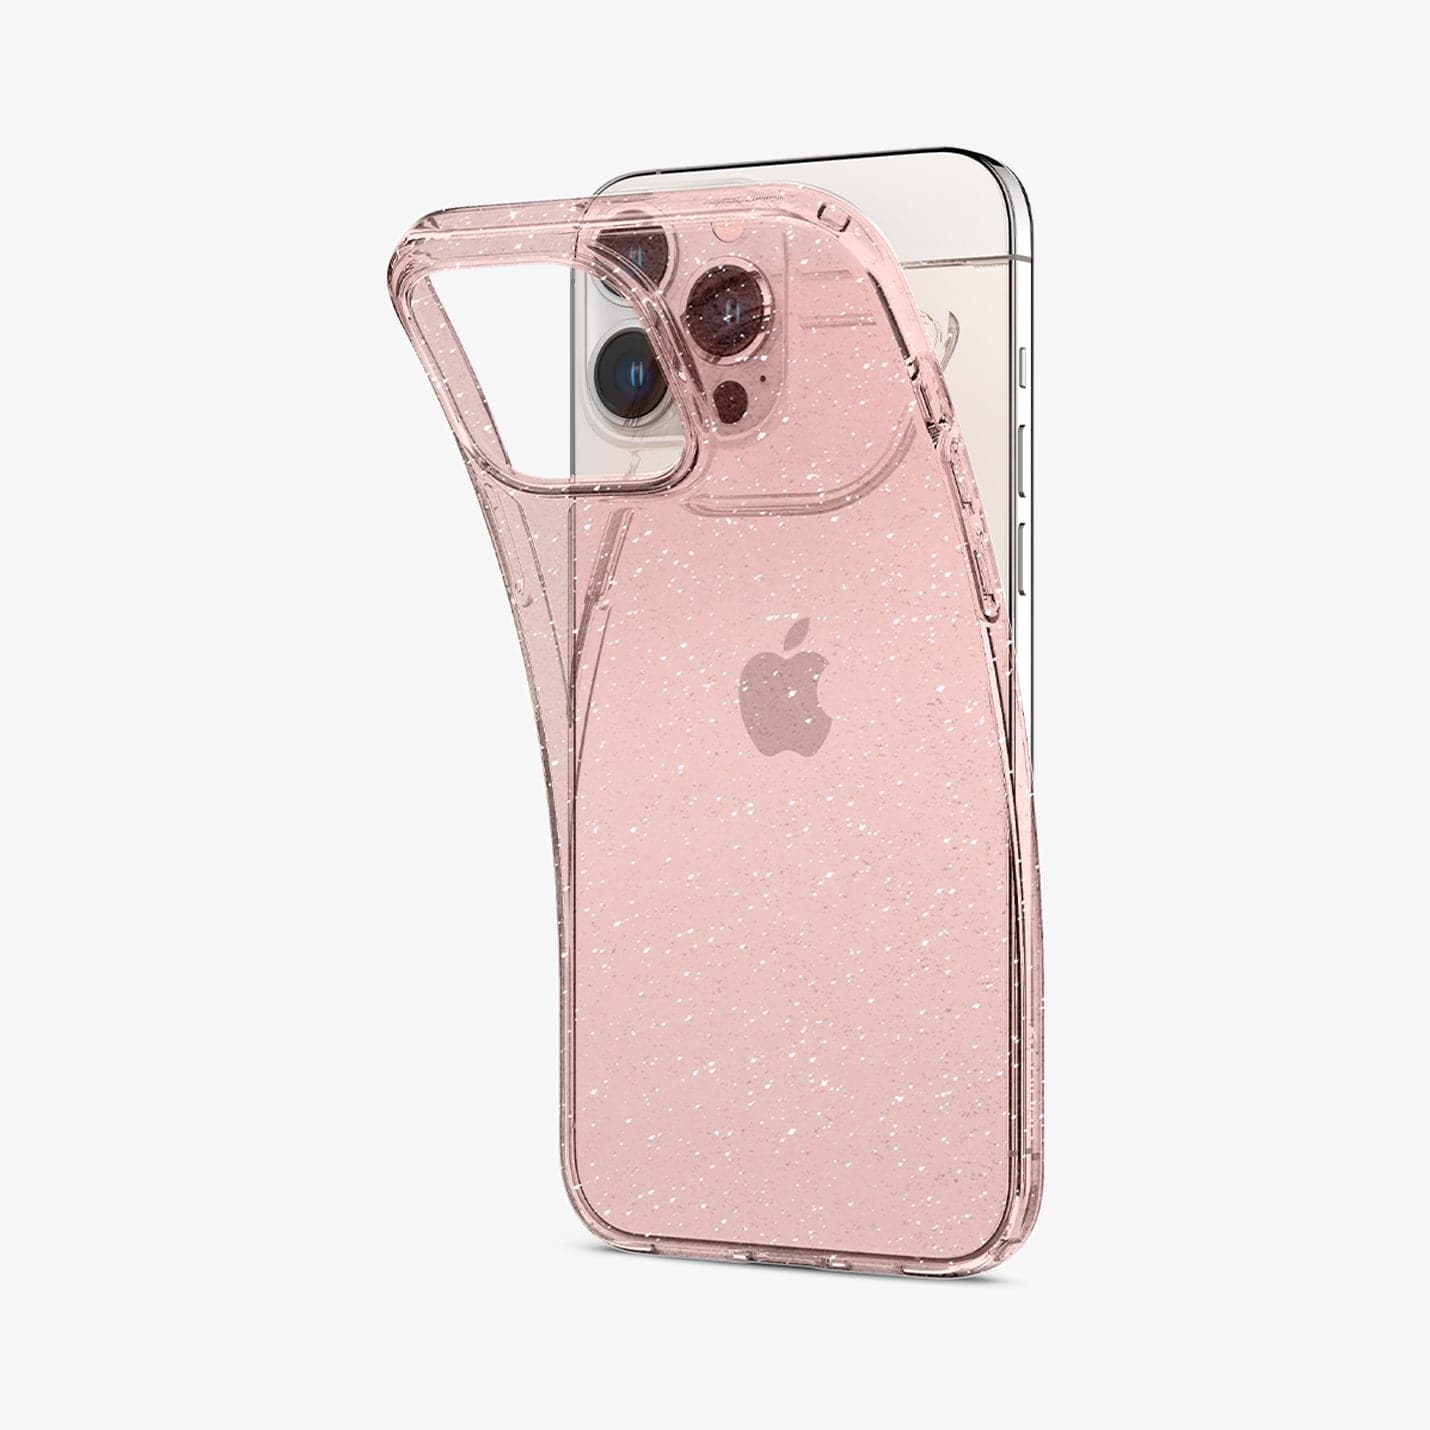 ACS03199 - iPhone 13 Pro Max Case Liquid Crystal Glitter in rose quartz showing the flexible back